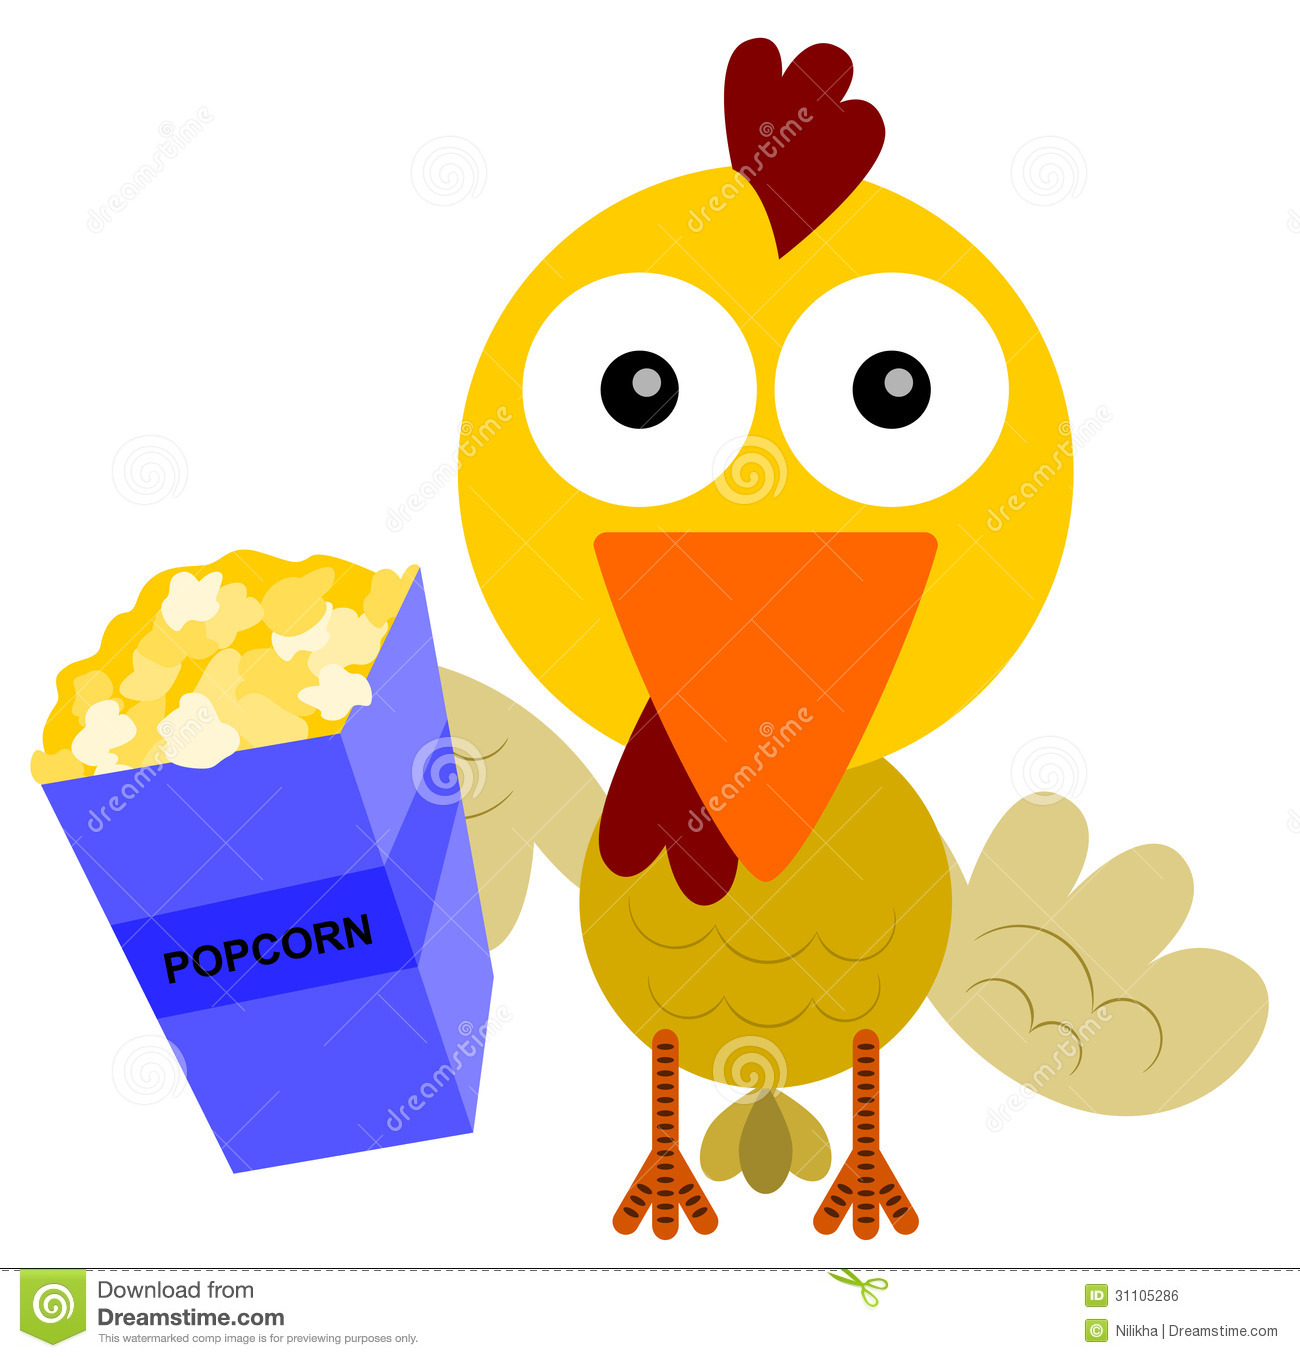 Chicken S Popcorn Royalty Free Stock Image   Image  31105286